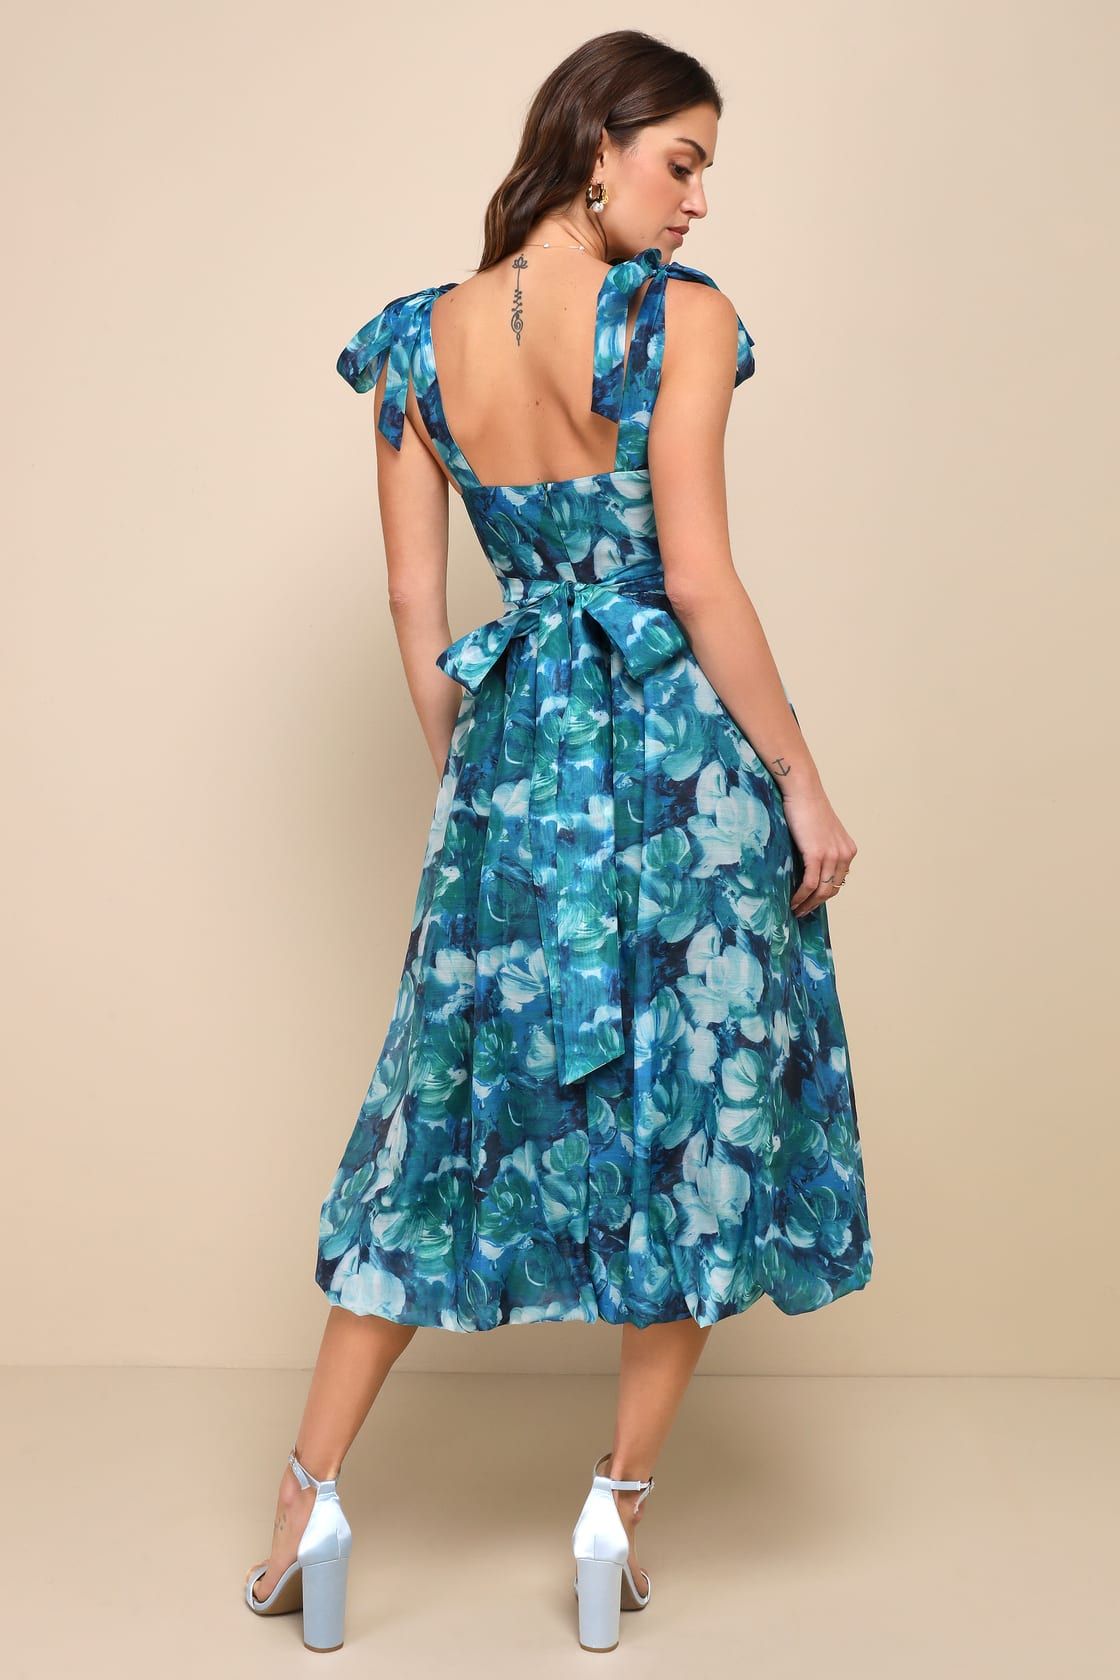 Flowering Day Dream Teal Blue Floral Organza Midi Bubble Dress | Lulus